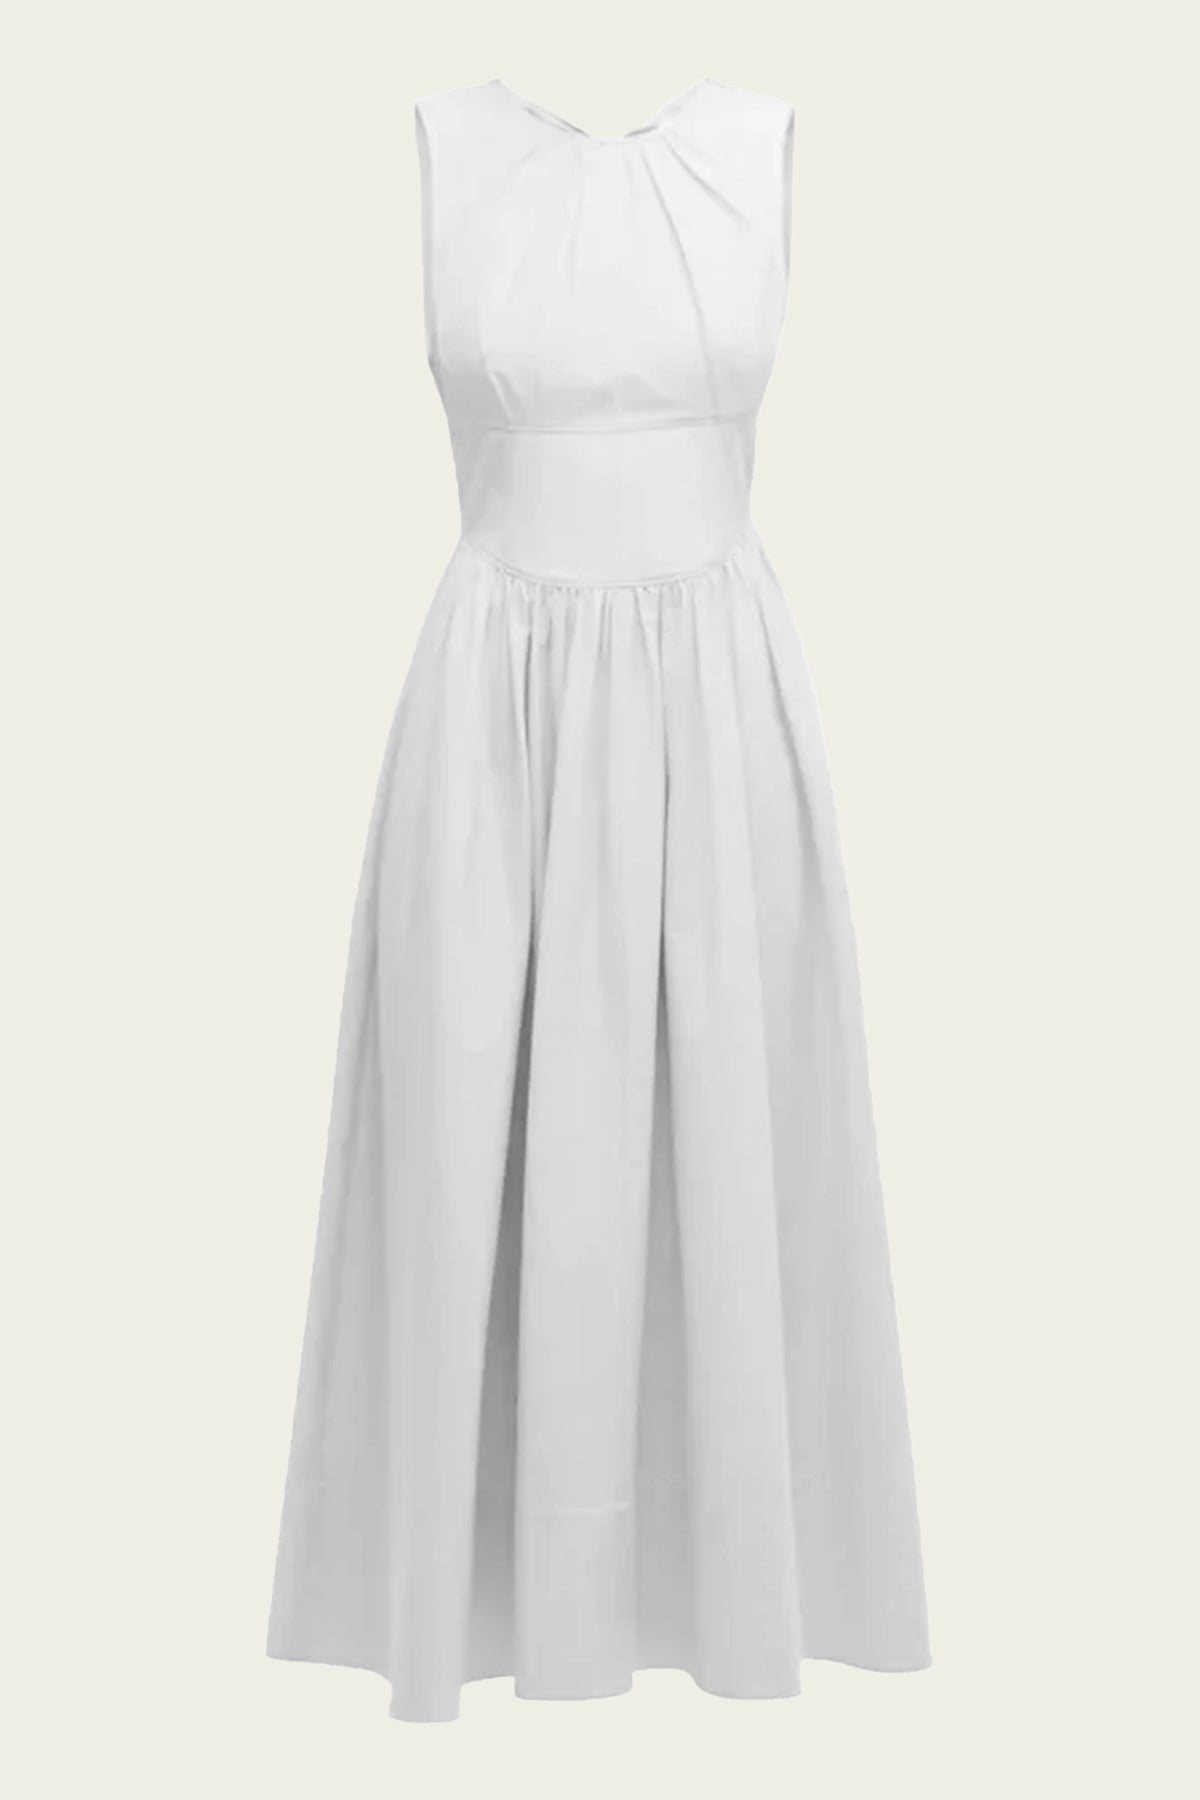 Benita Dress in White - shop-olivia.com